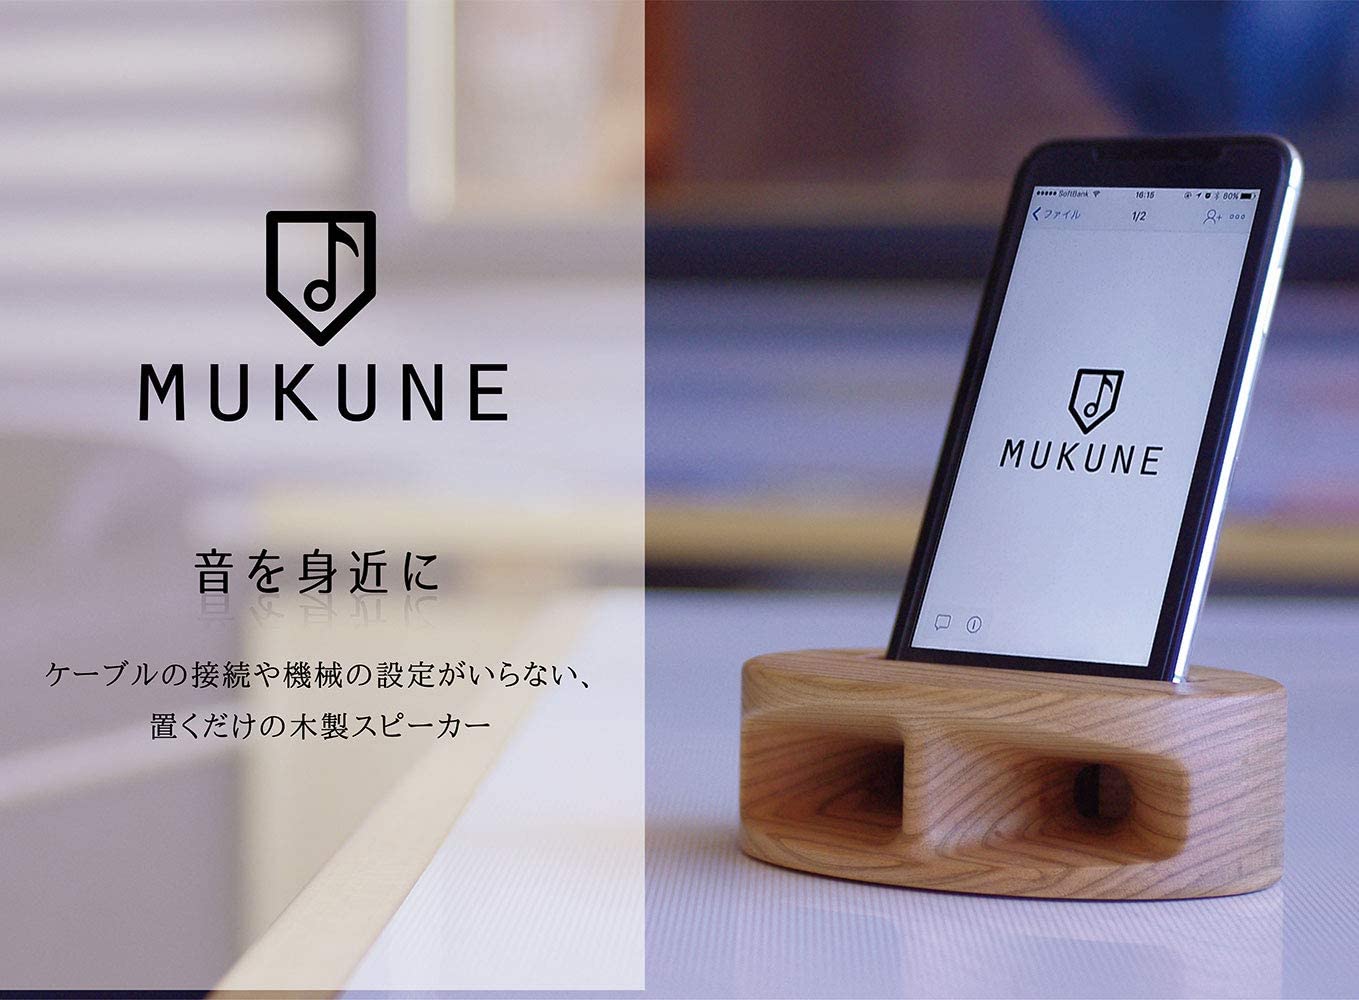 MUKUNE iPhone用 無電源 木製スピーカー  スタンダードタイプ ヤマザクラ